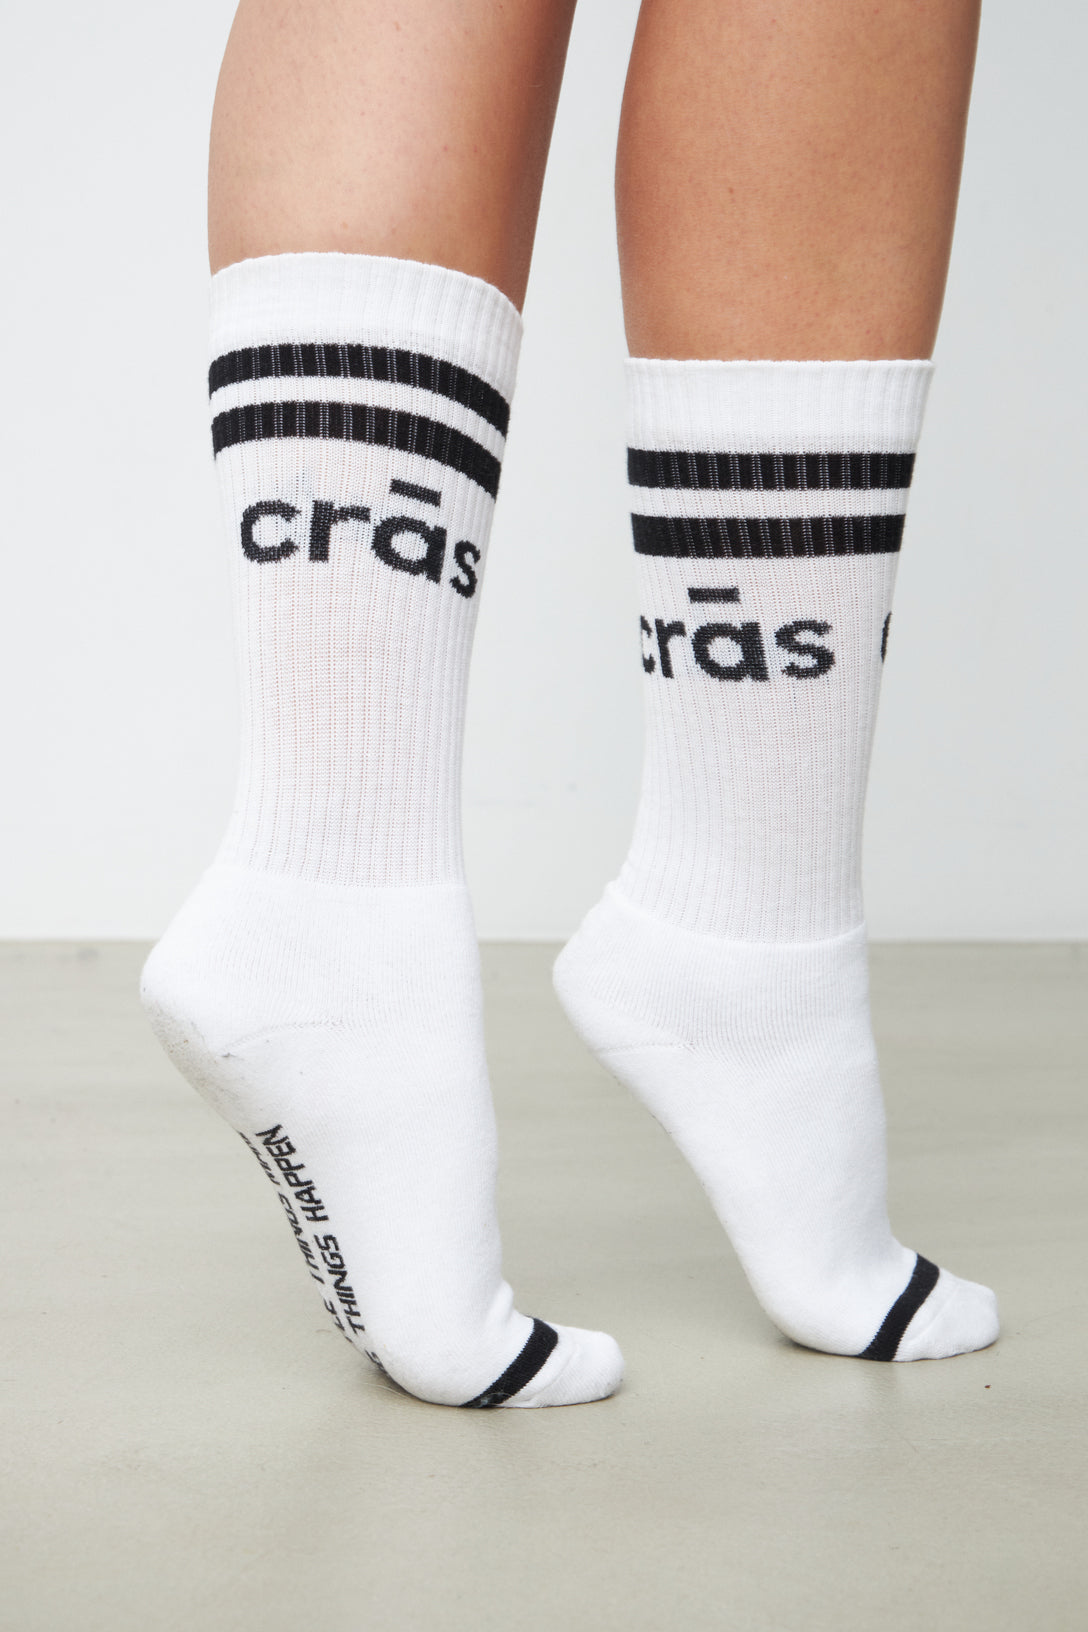 CRAS Cras logo Sock Accessory White/Black